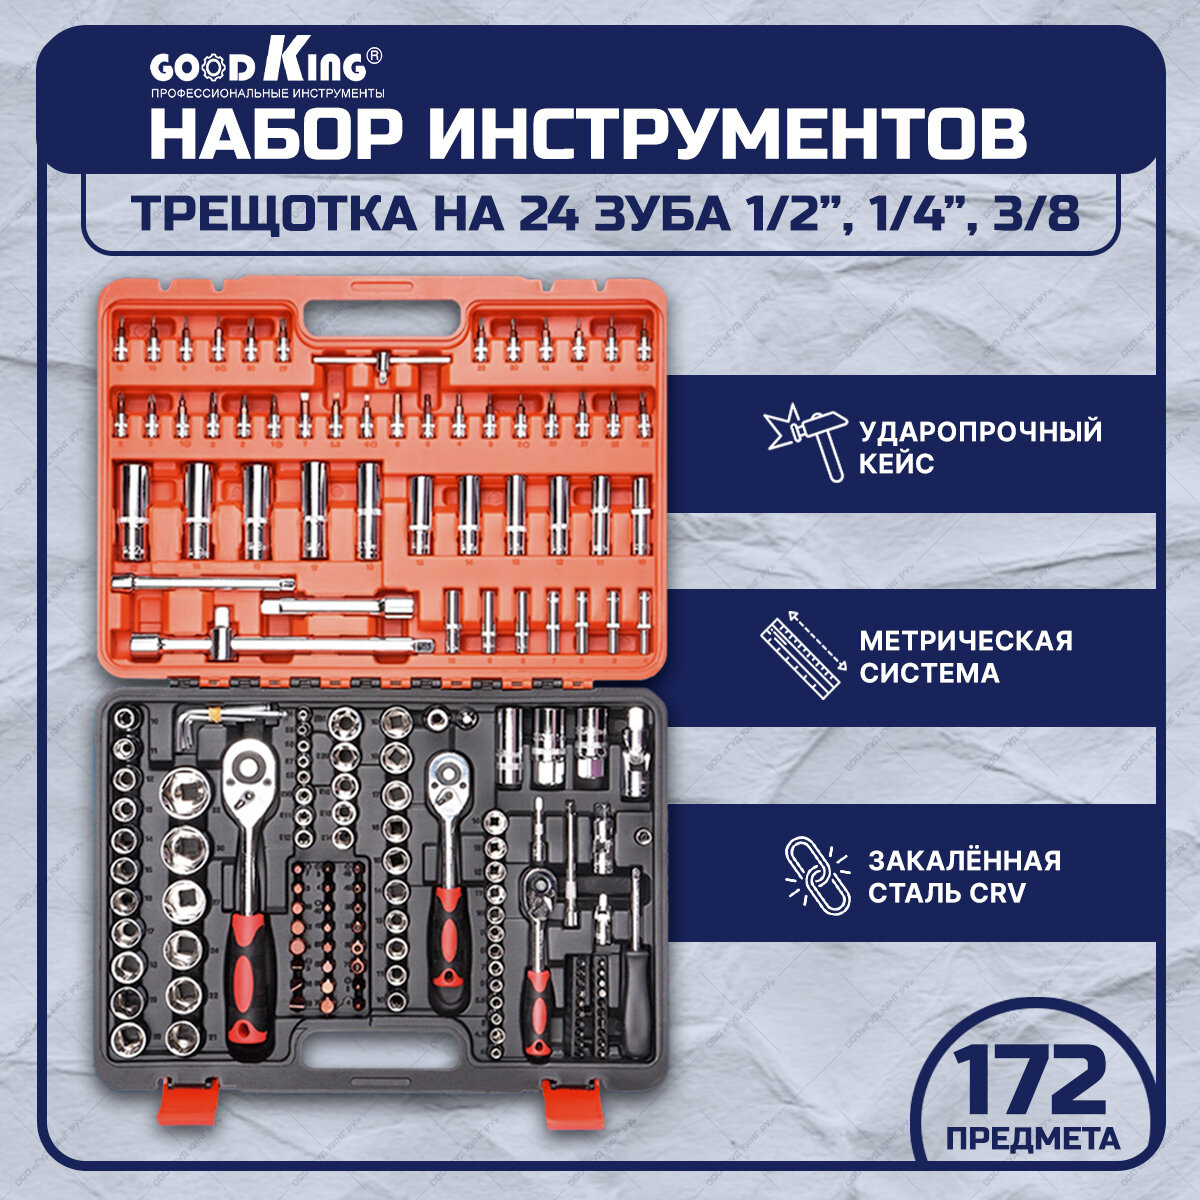 Набор инструментов 172 предмета 1/4" 3/8" 1/2" трещотка 24 зуба GOODKING K-10172, tools для дома, для автомобиля